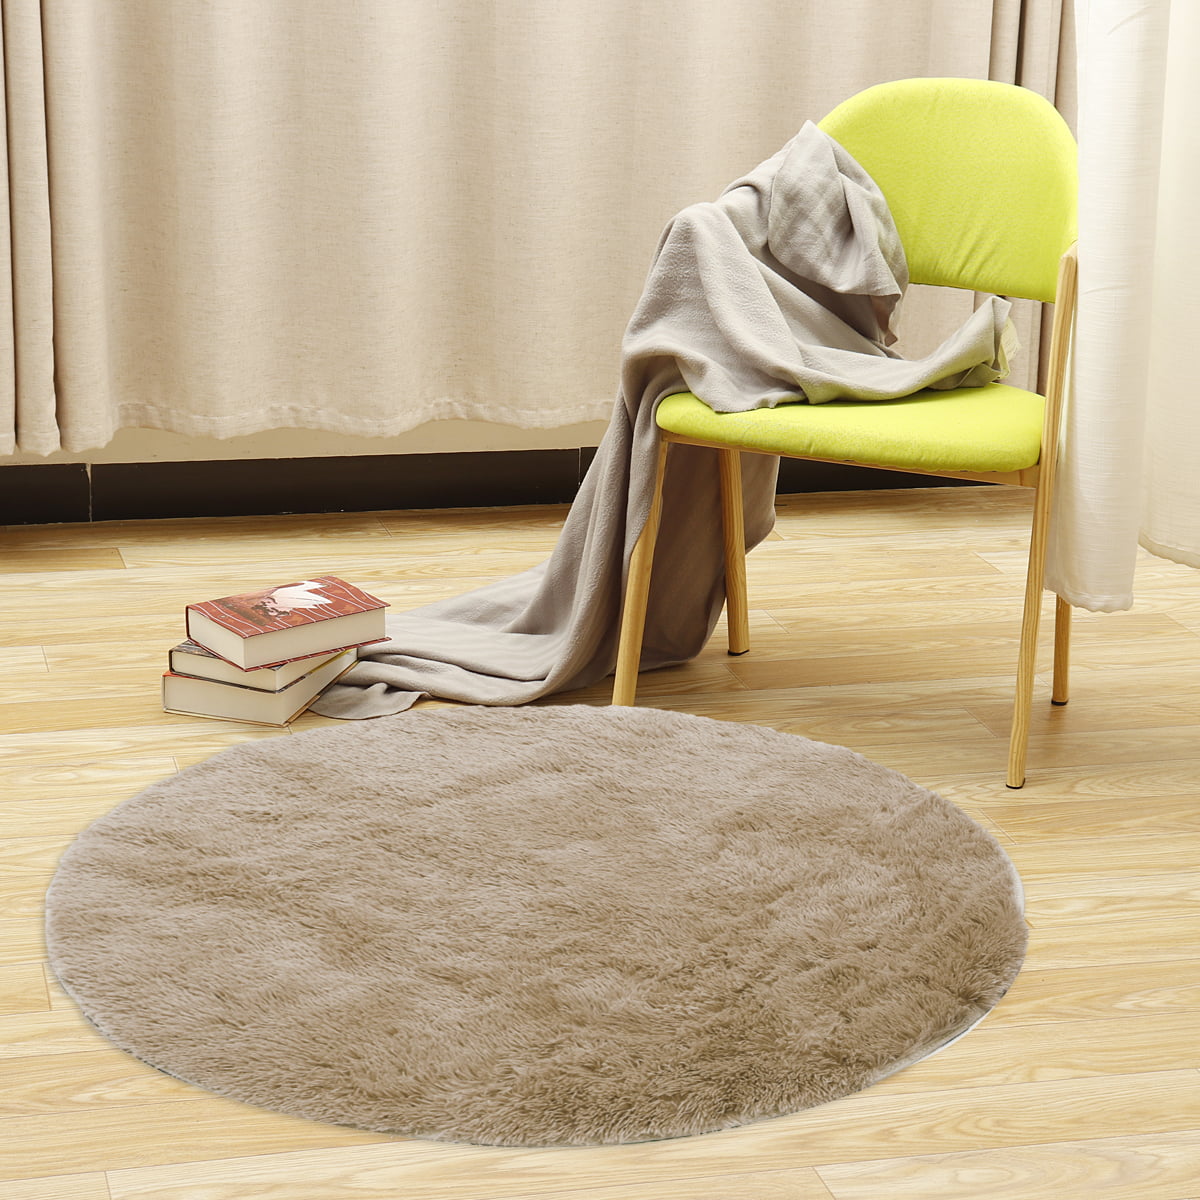 Non Slip Door Mats Inside Floor Mats Area Rug Abstract color Chair Mat Protector for Hard Floors